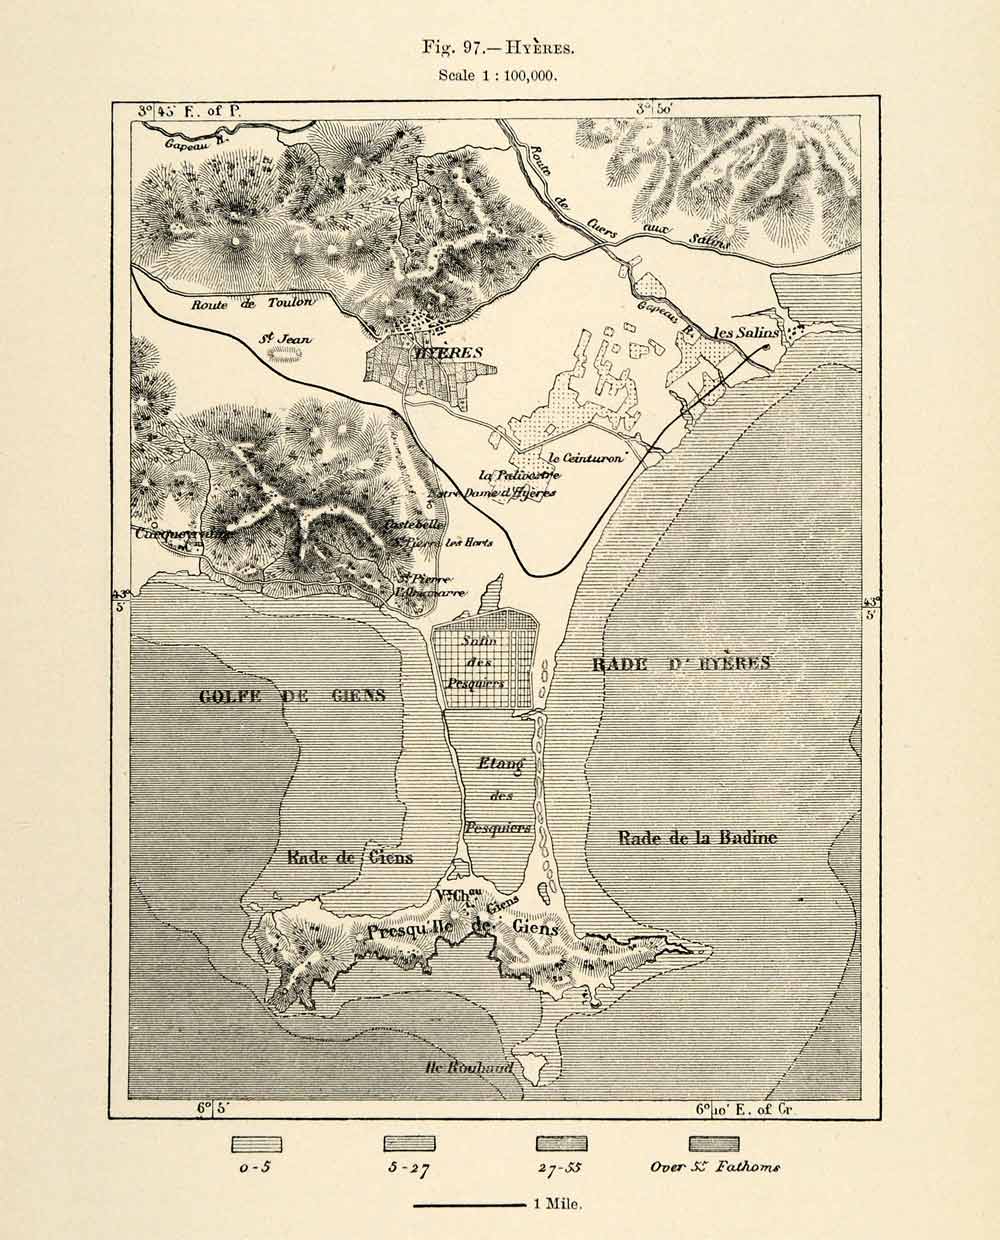 1882 Relief Line-block Map Hyeres Map France Rade Ciens Golfe de Giens XGS6